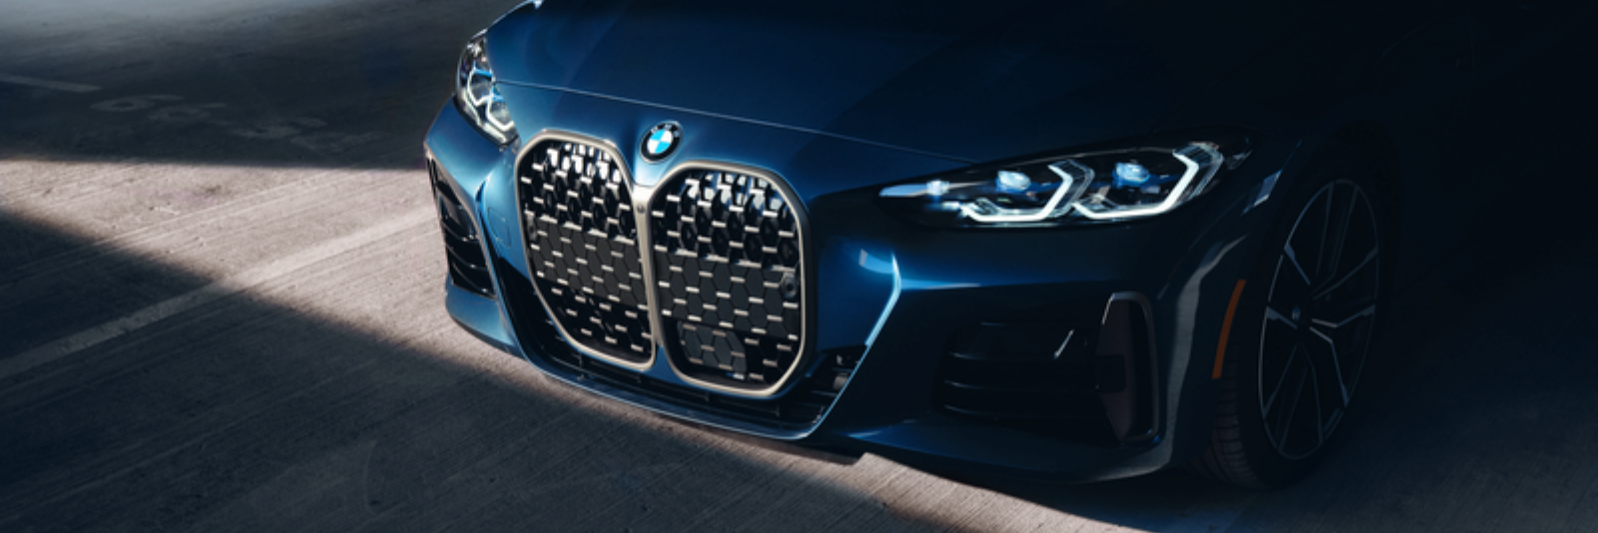 BMW blue front end